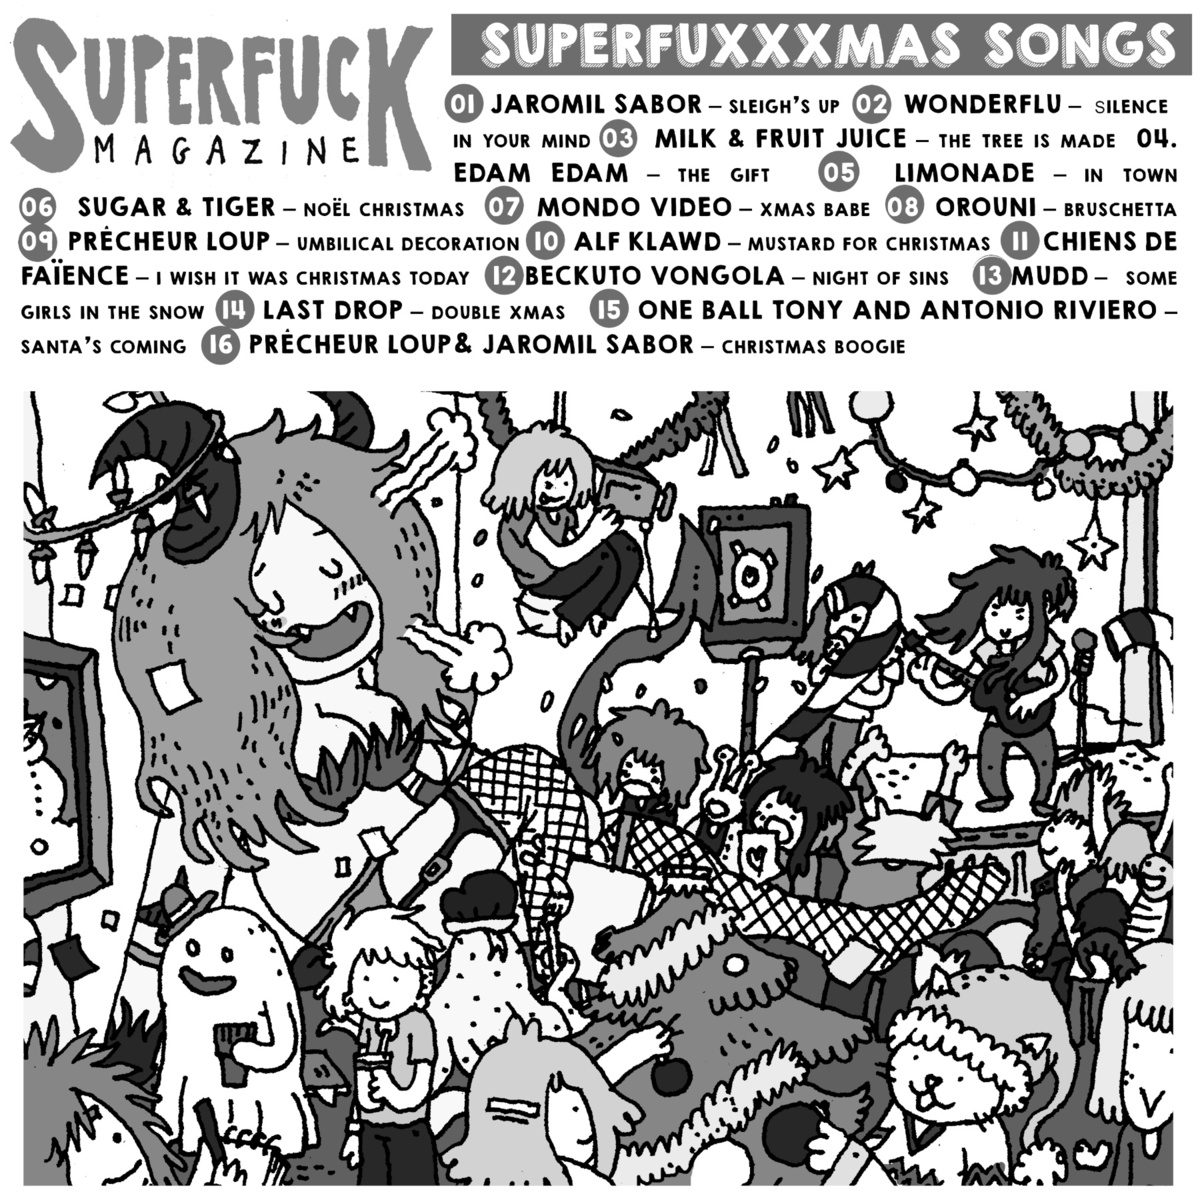 Superfuxxxmas Songs